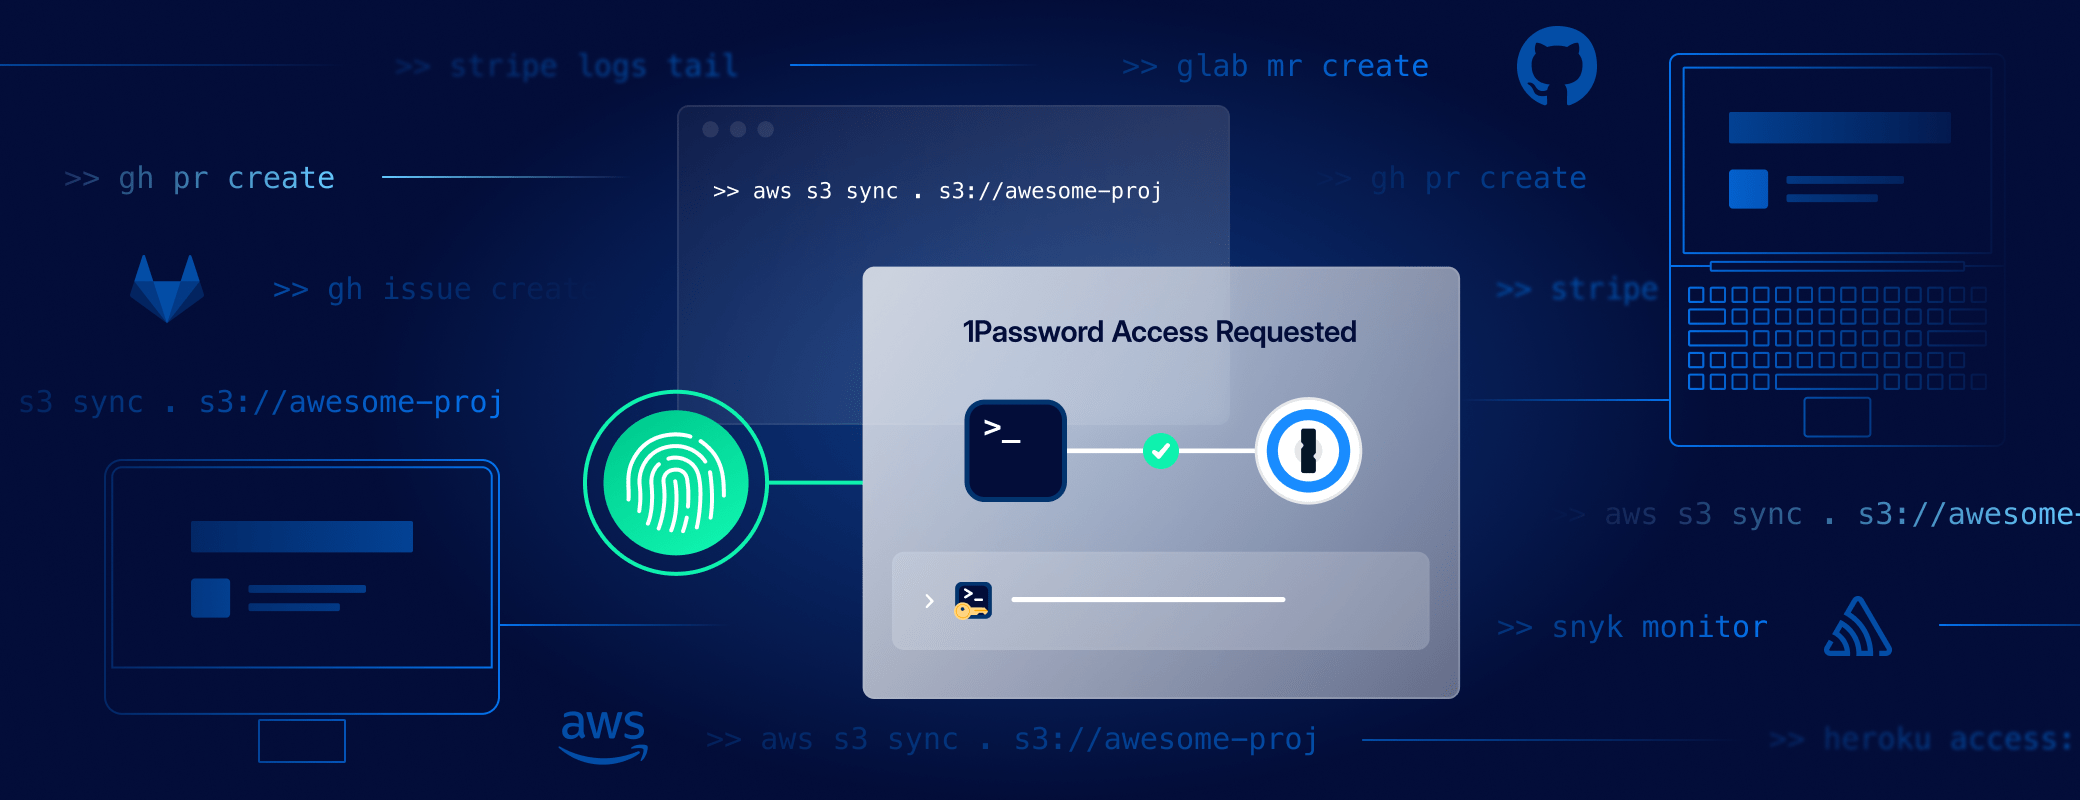 Unlock any CLI using biometrics with 1Password Shell Plugins